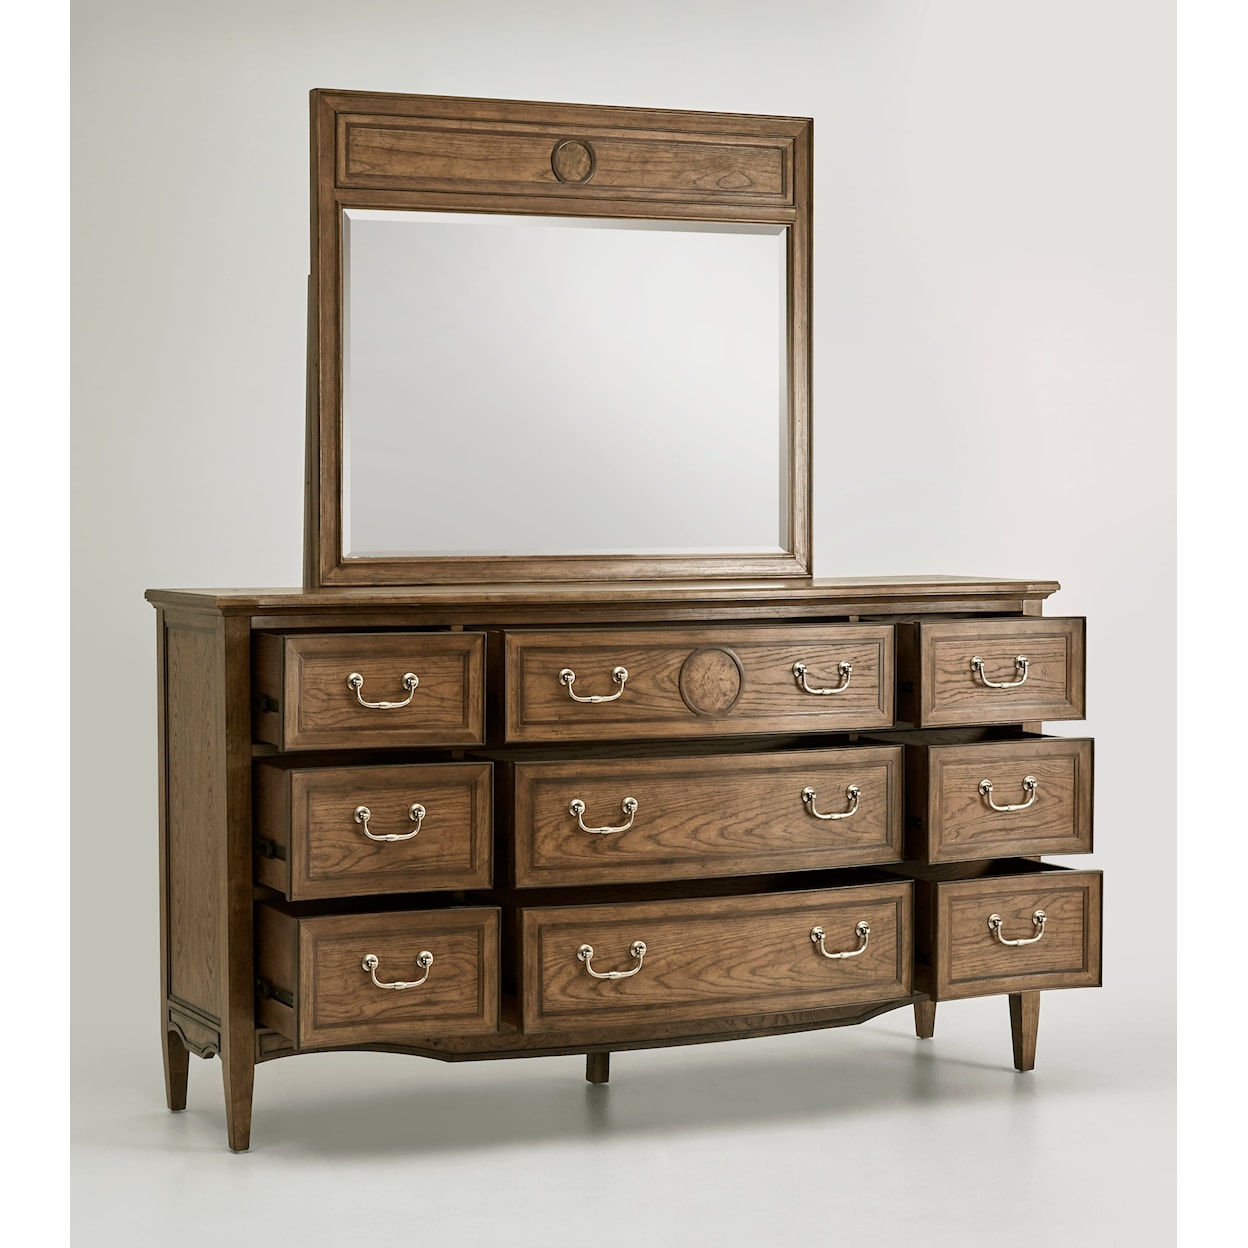 The Preserve Seneca Dresser and Mirror